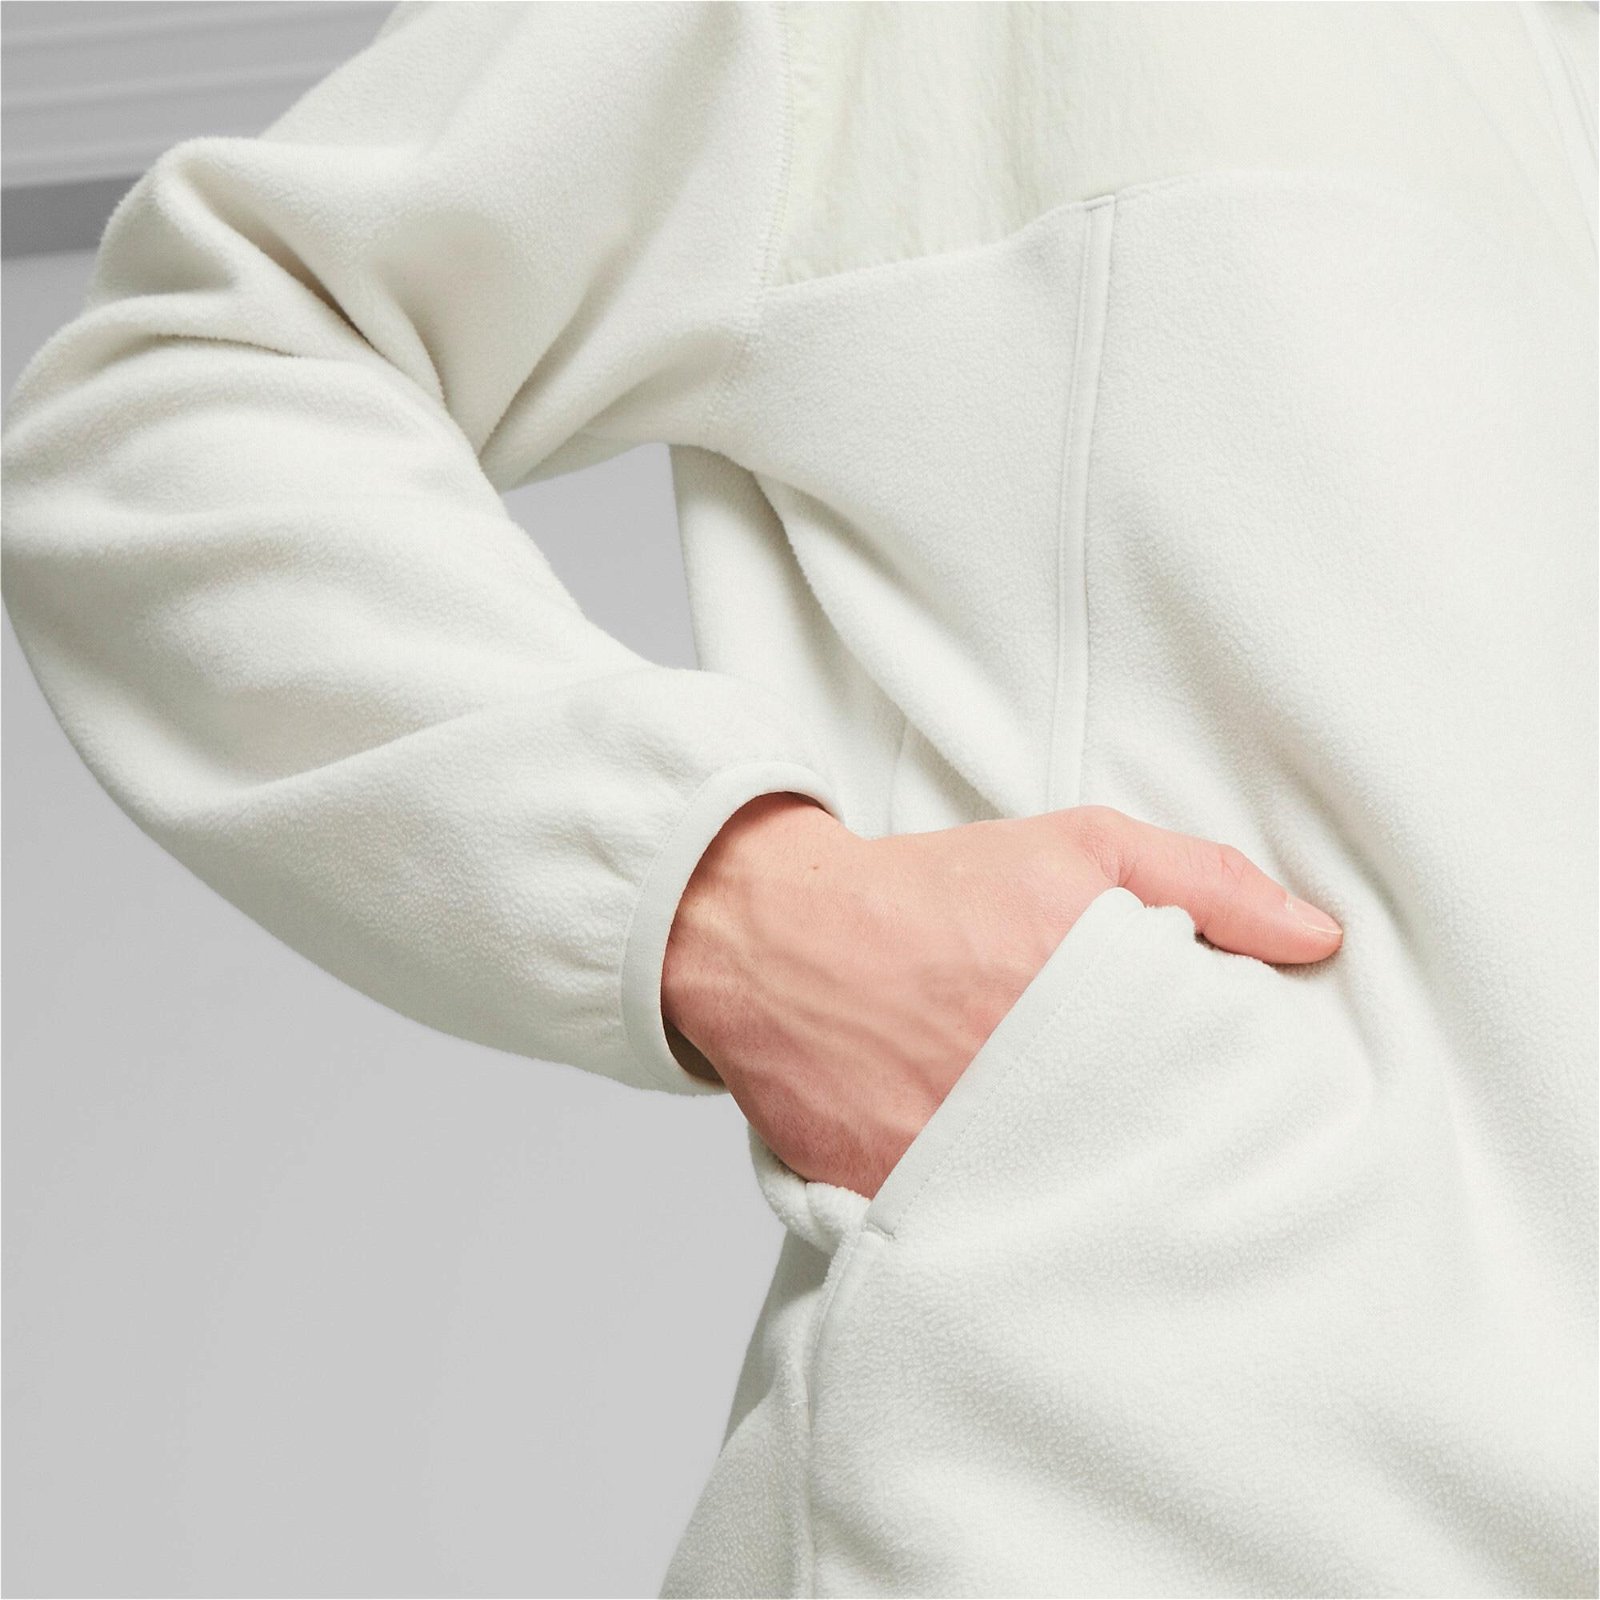 Puma Classics Erkek Beyaz Sweatshirt